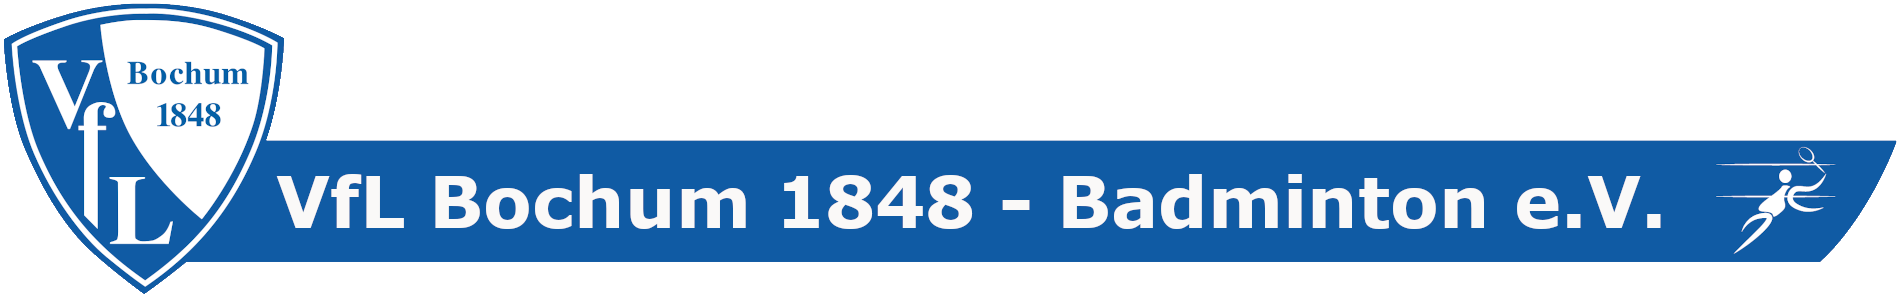 VfL Bochum 1848 – Badminton e.V.